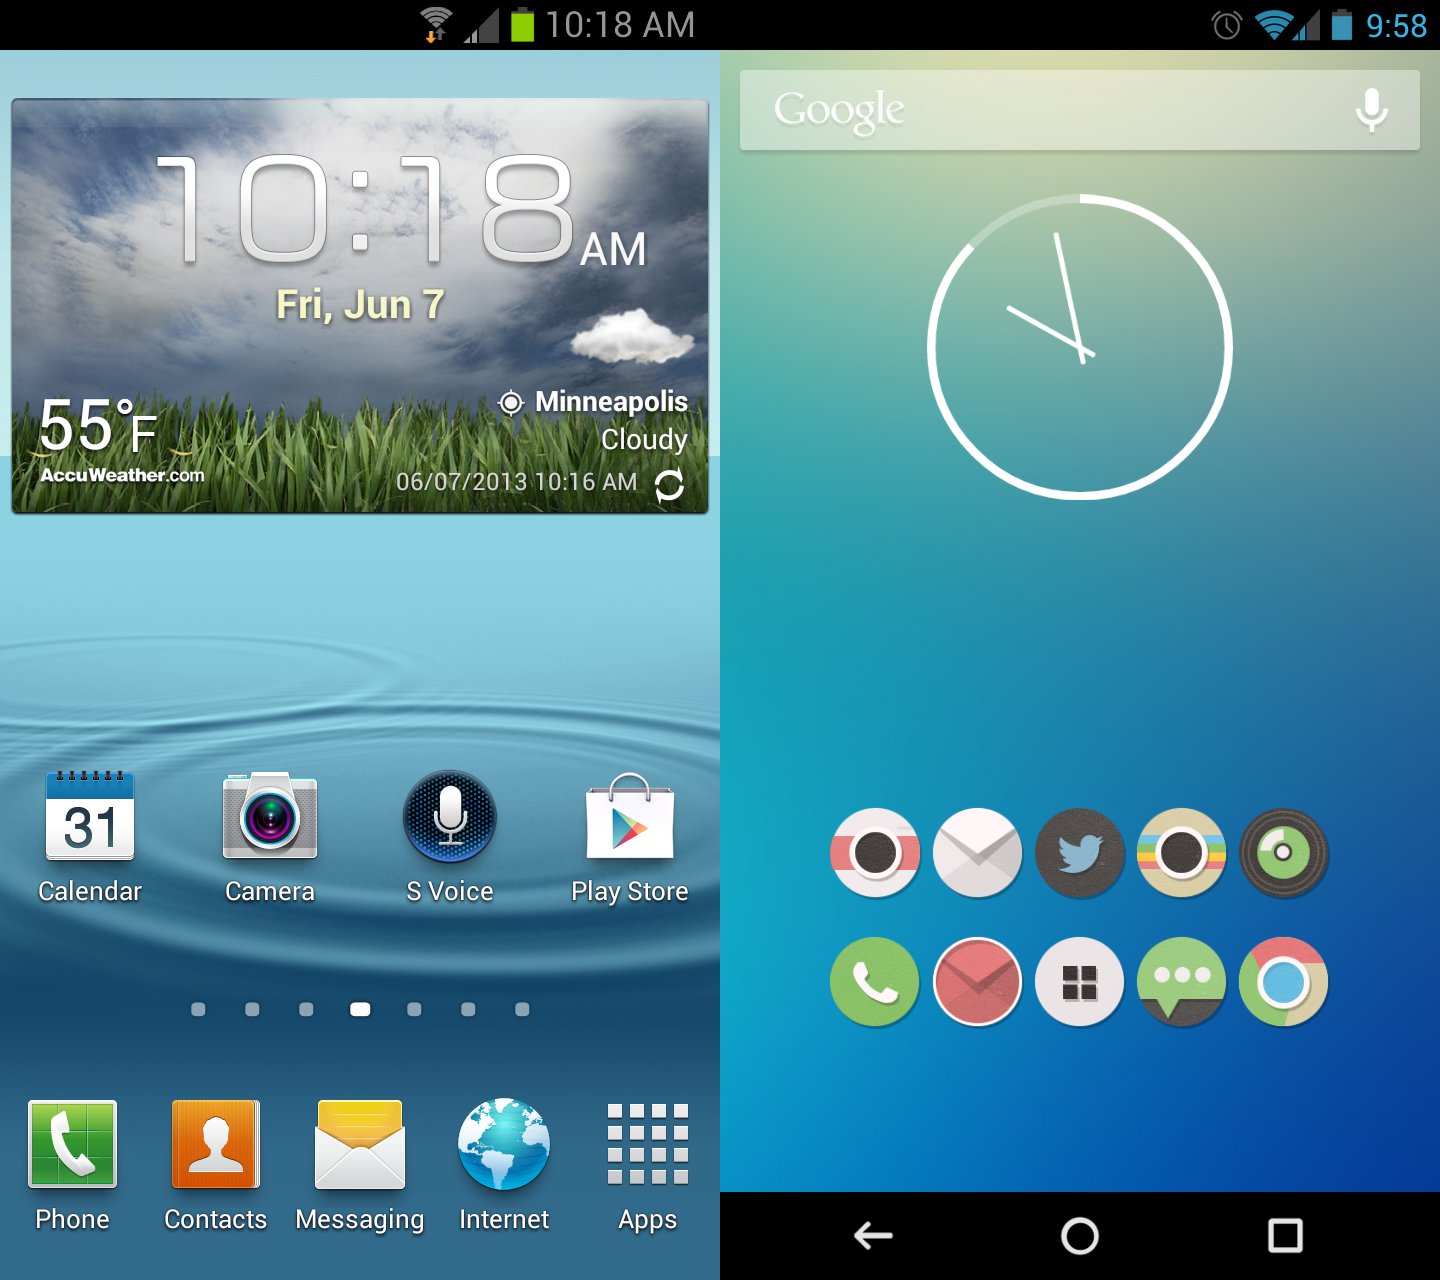 Меню экрана андроид. Скрин экрана андроид. Экран телефона андроид. Скриншот экрана Android. Главный экран андроид.